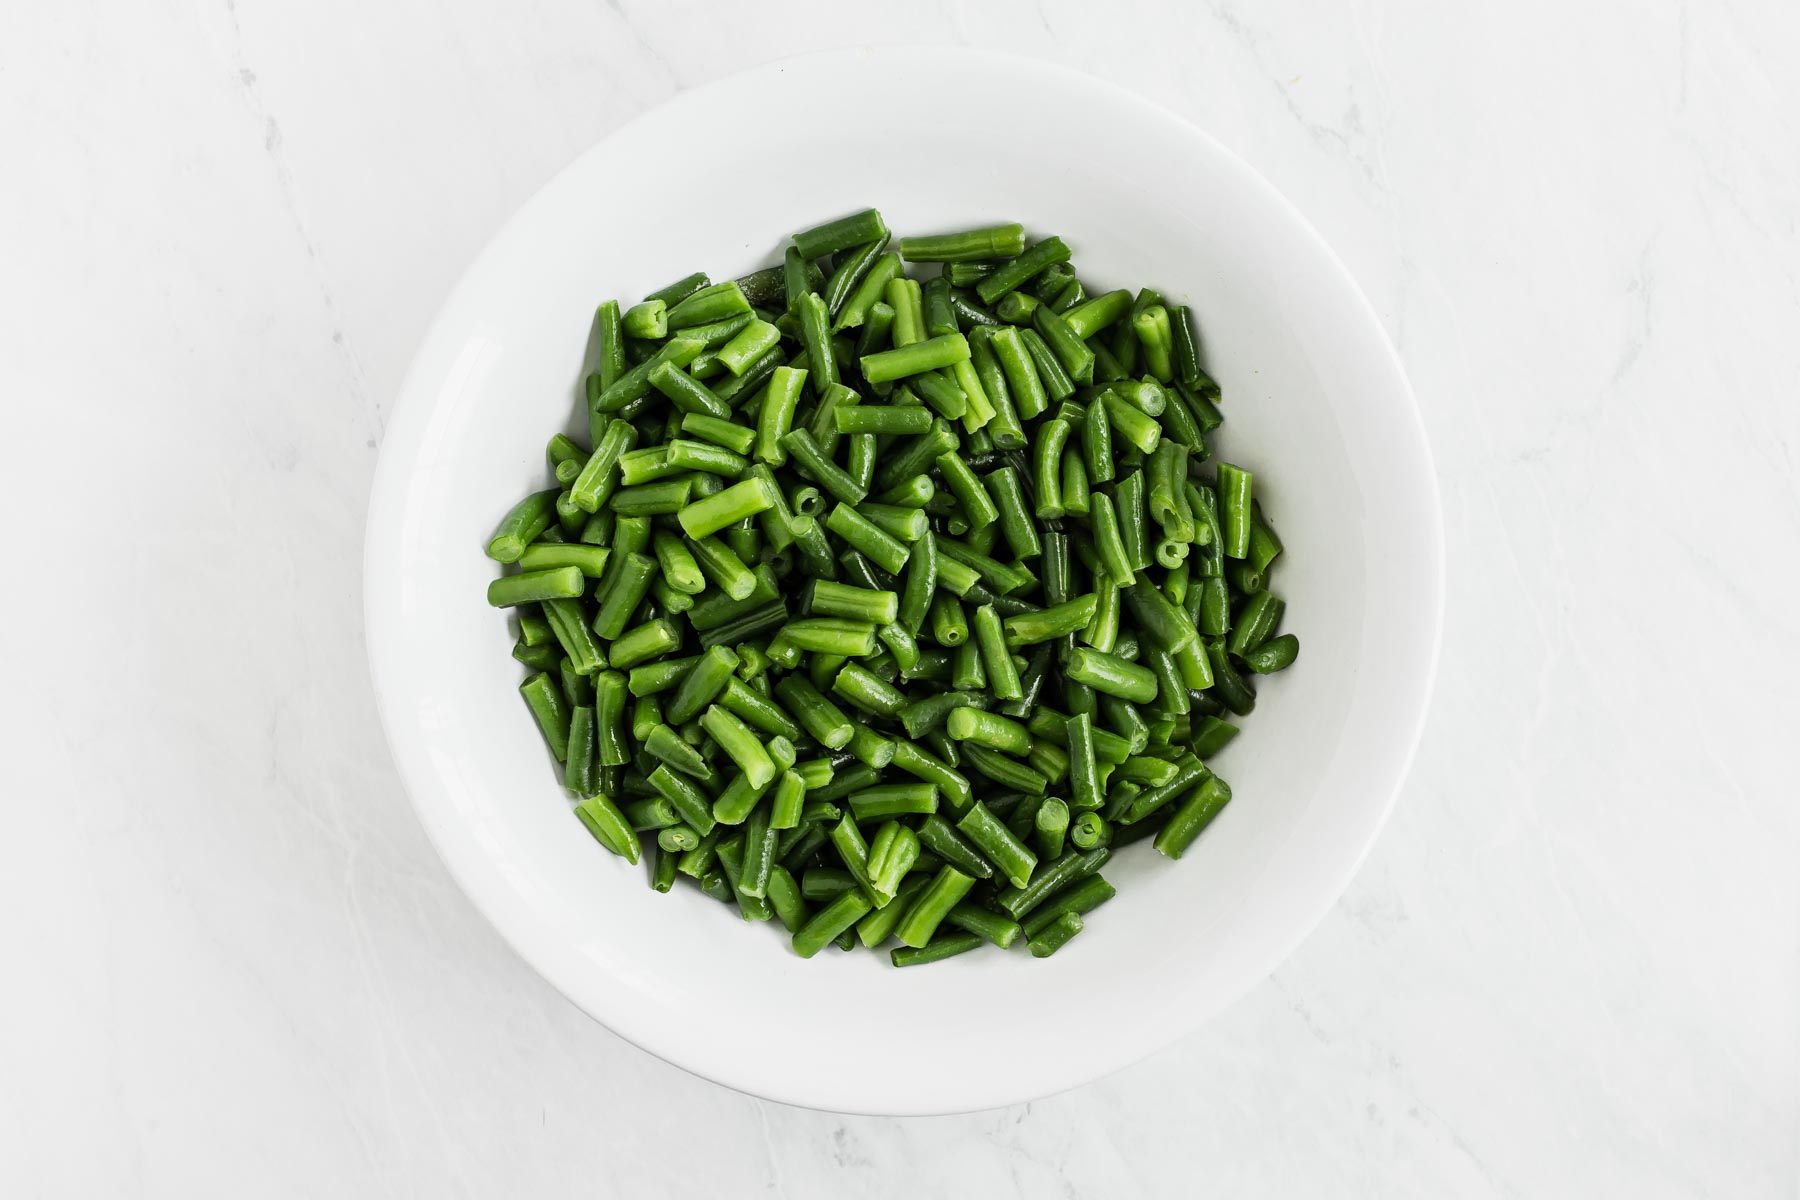 Raw cut green beans in a white bowl.